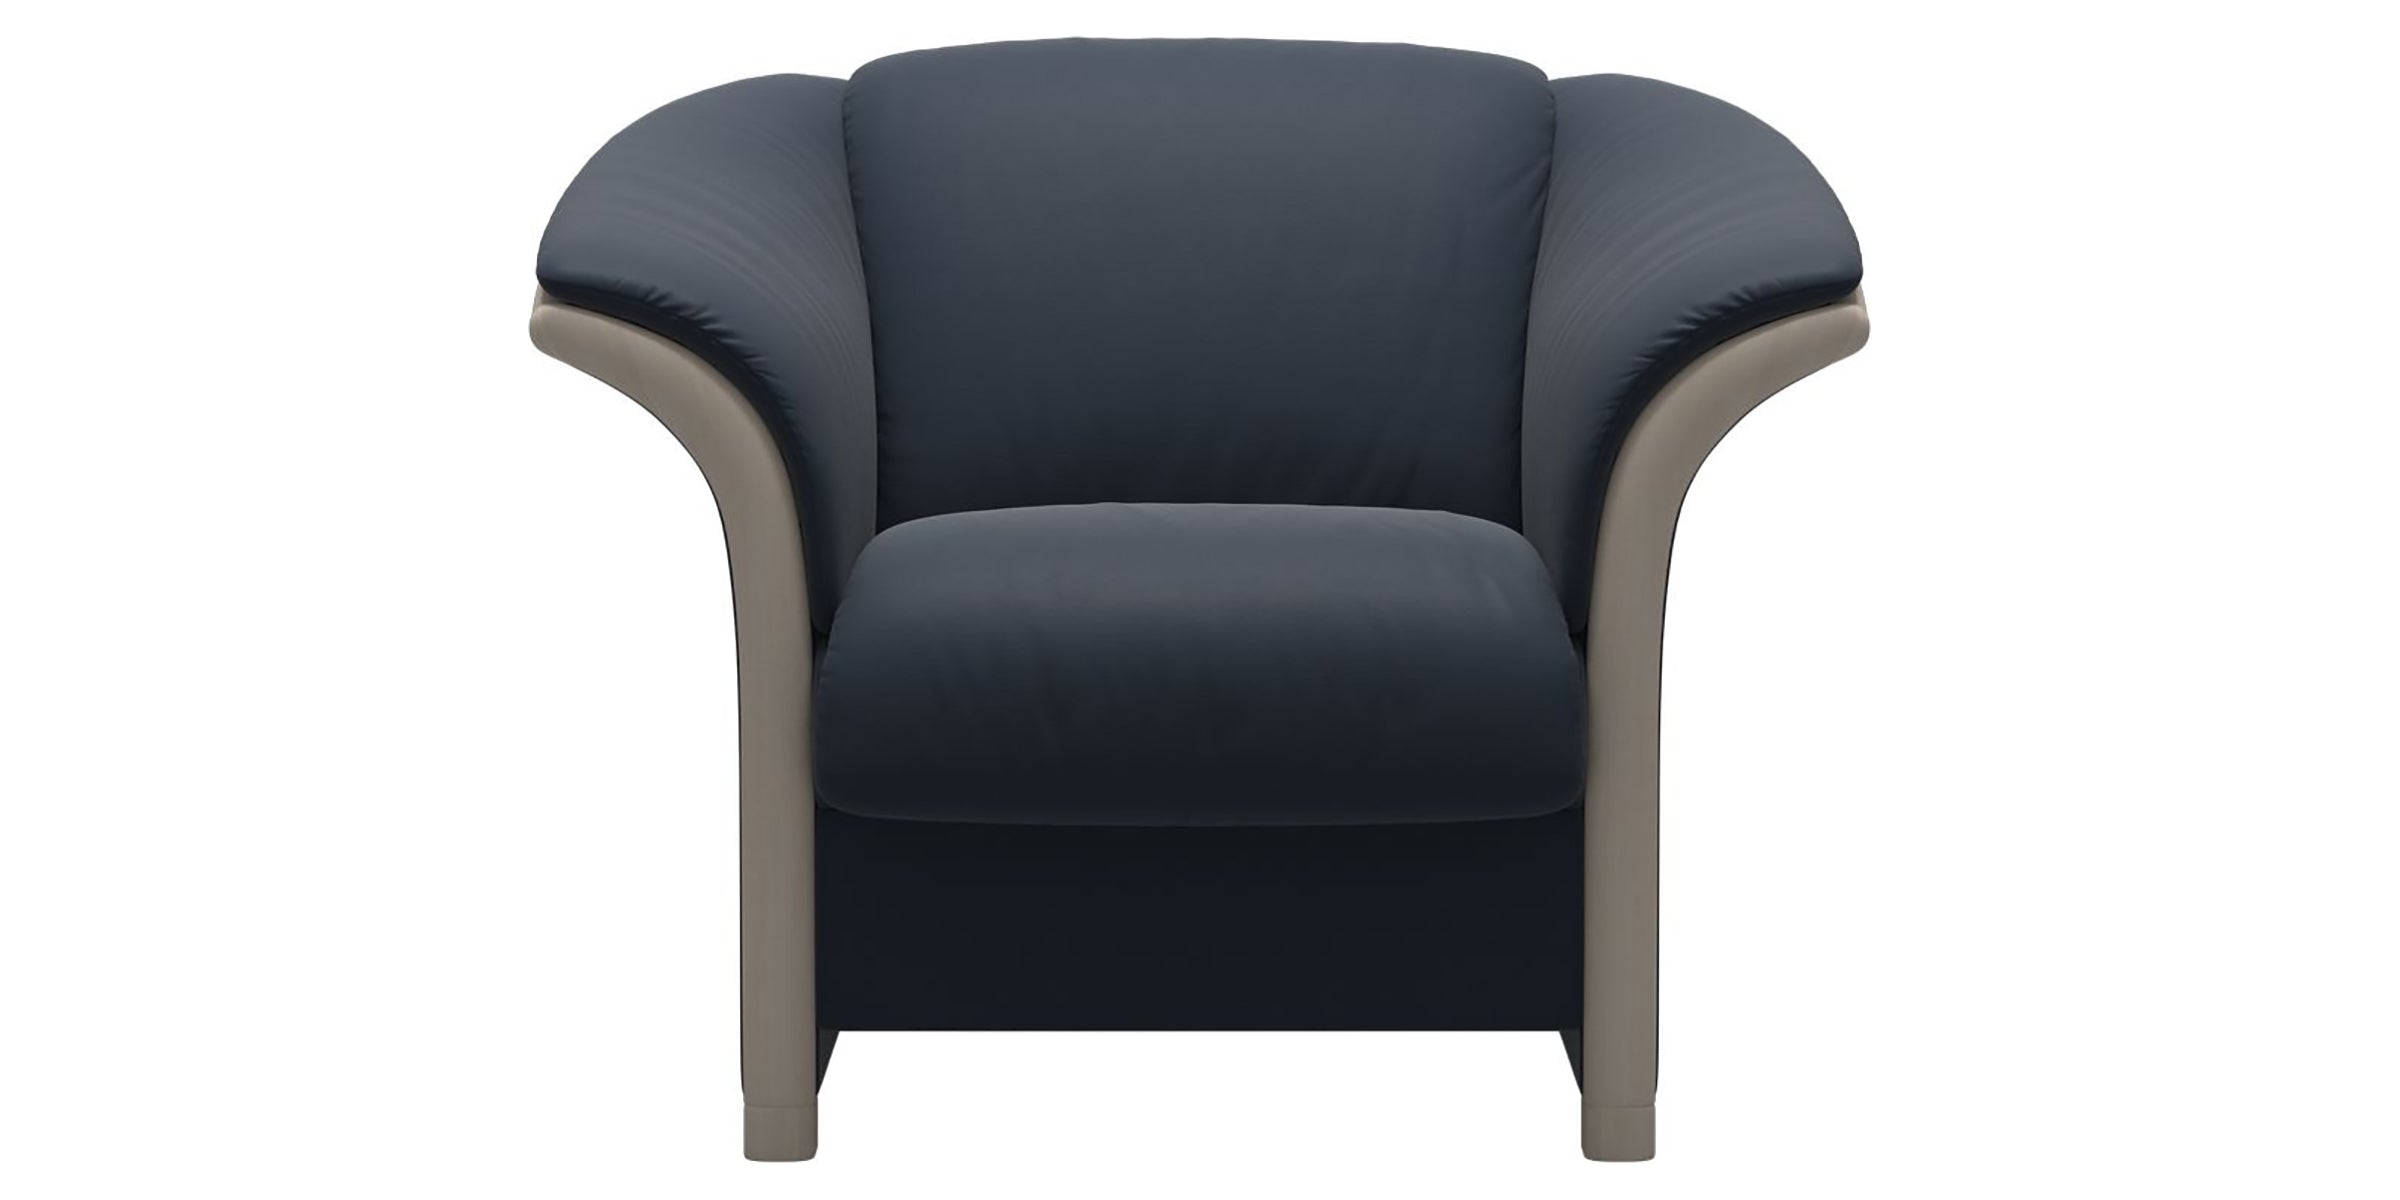 Paloma Leather Oxford Blue and Whitewash Arm Trim | Stressless Manhattan Chair | Valley Ridge Furniture